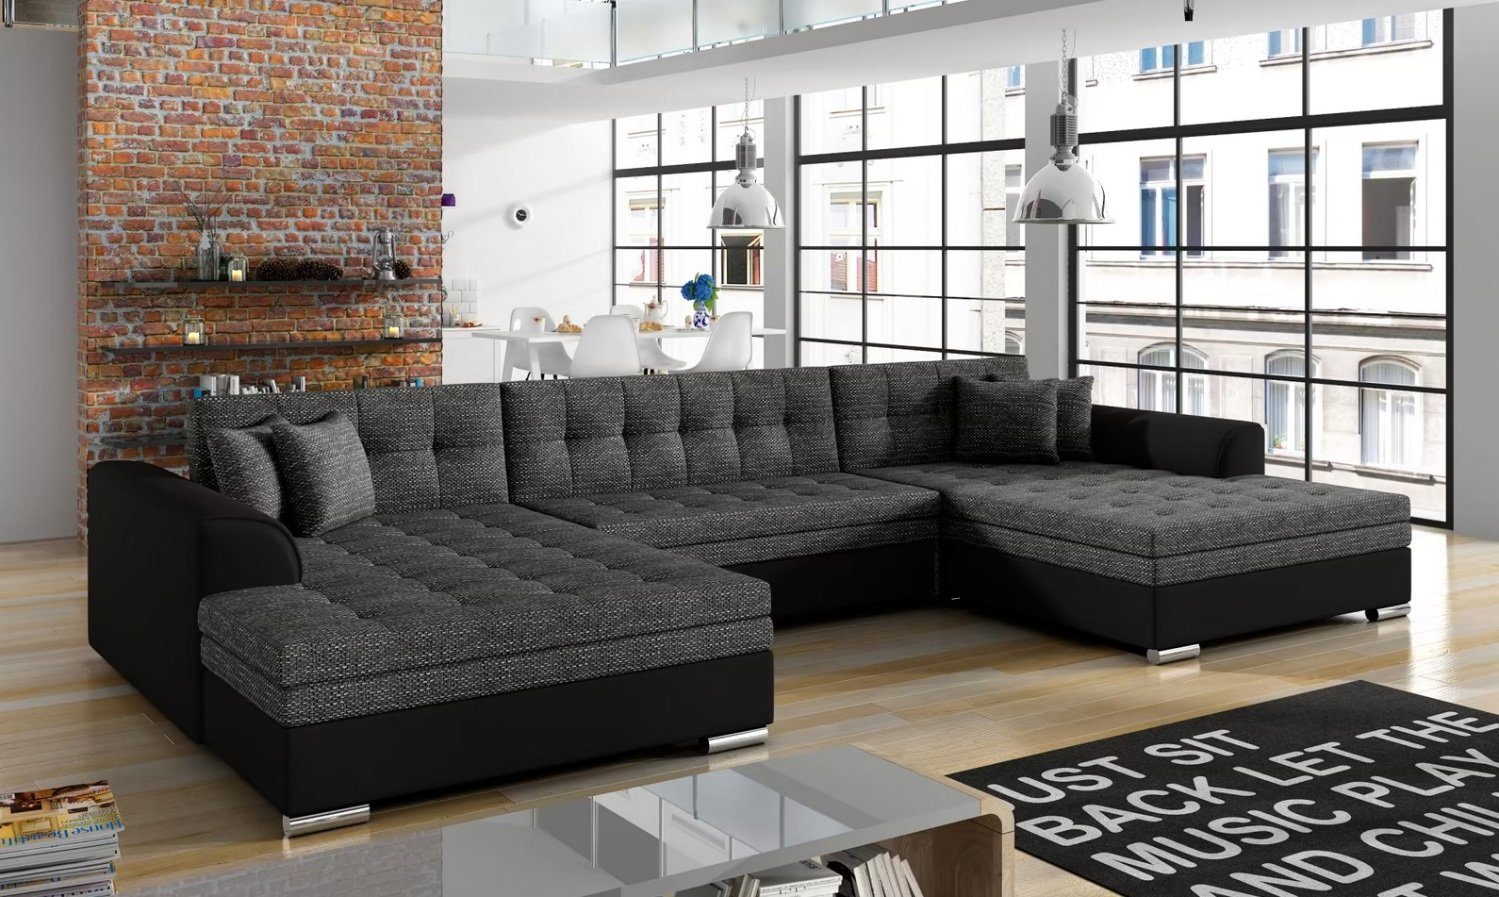 Design Ecksofa U-form Schlafsofa Bettfunktion Couch Polster Textil Sofas Neu Sofort